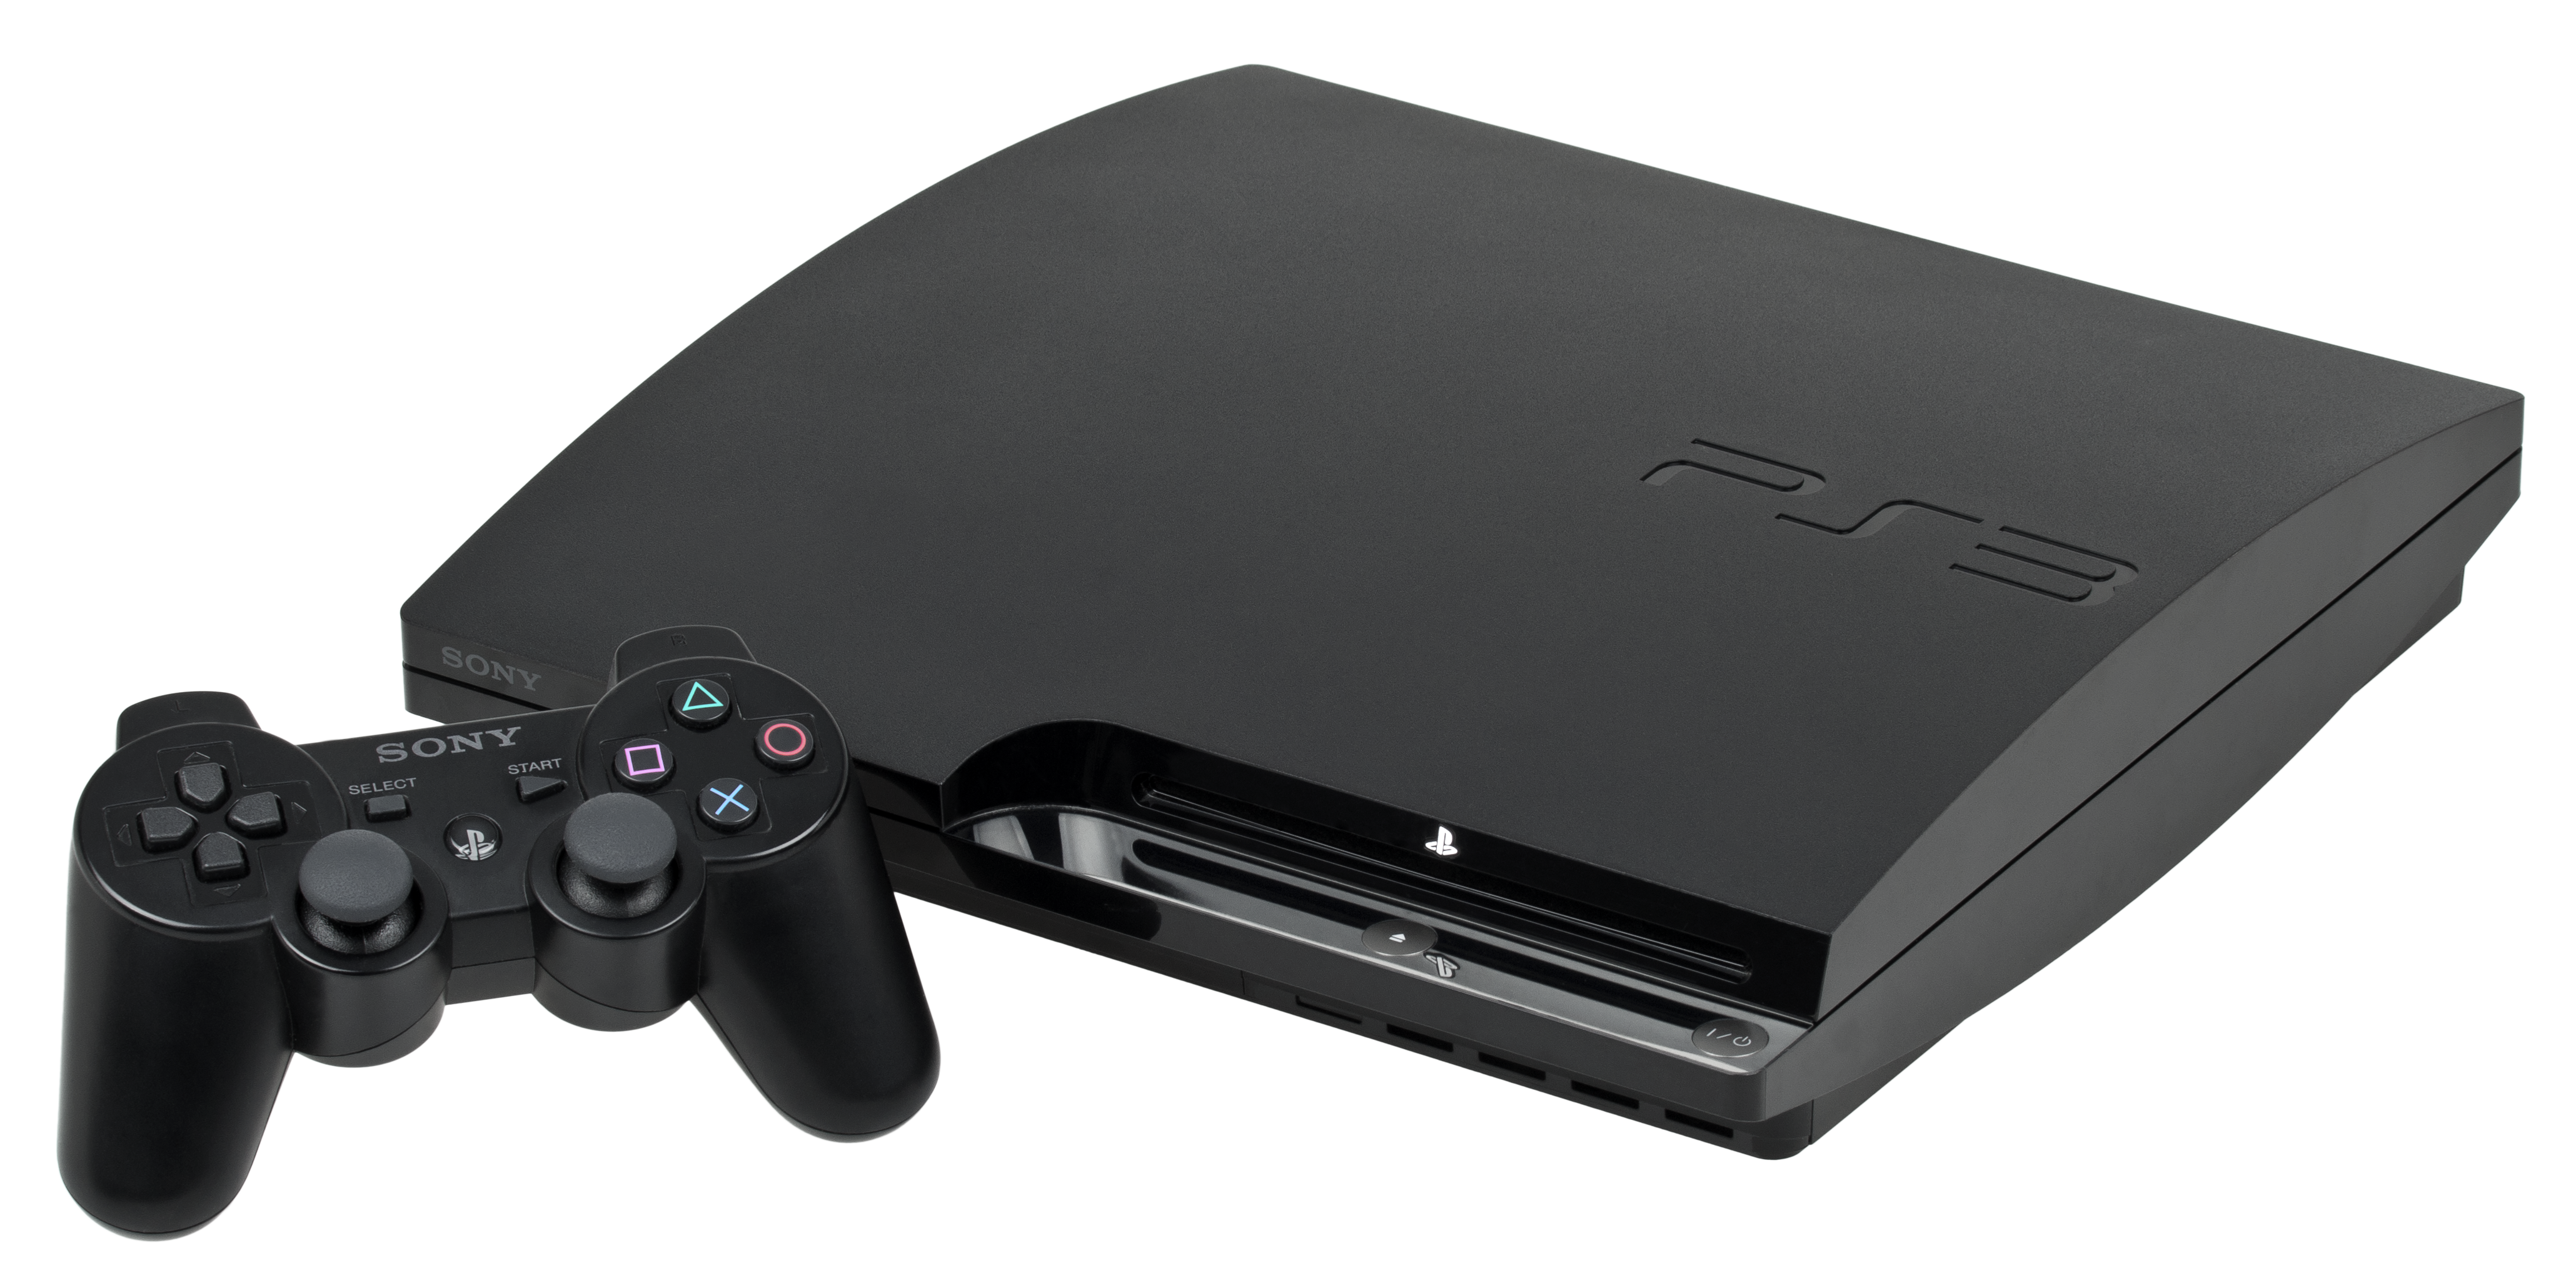 Was PlayStation 3 a failure?